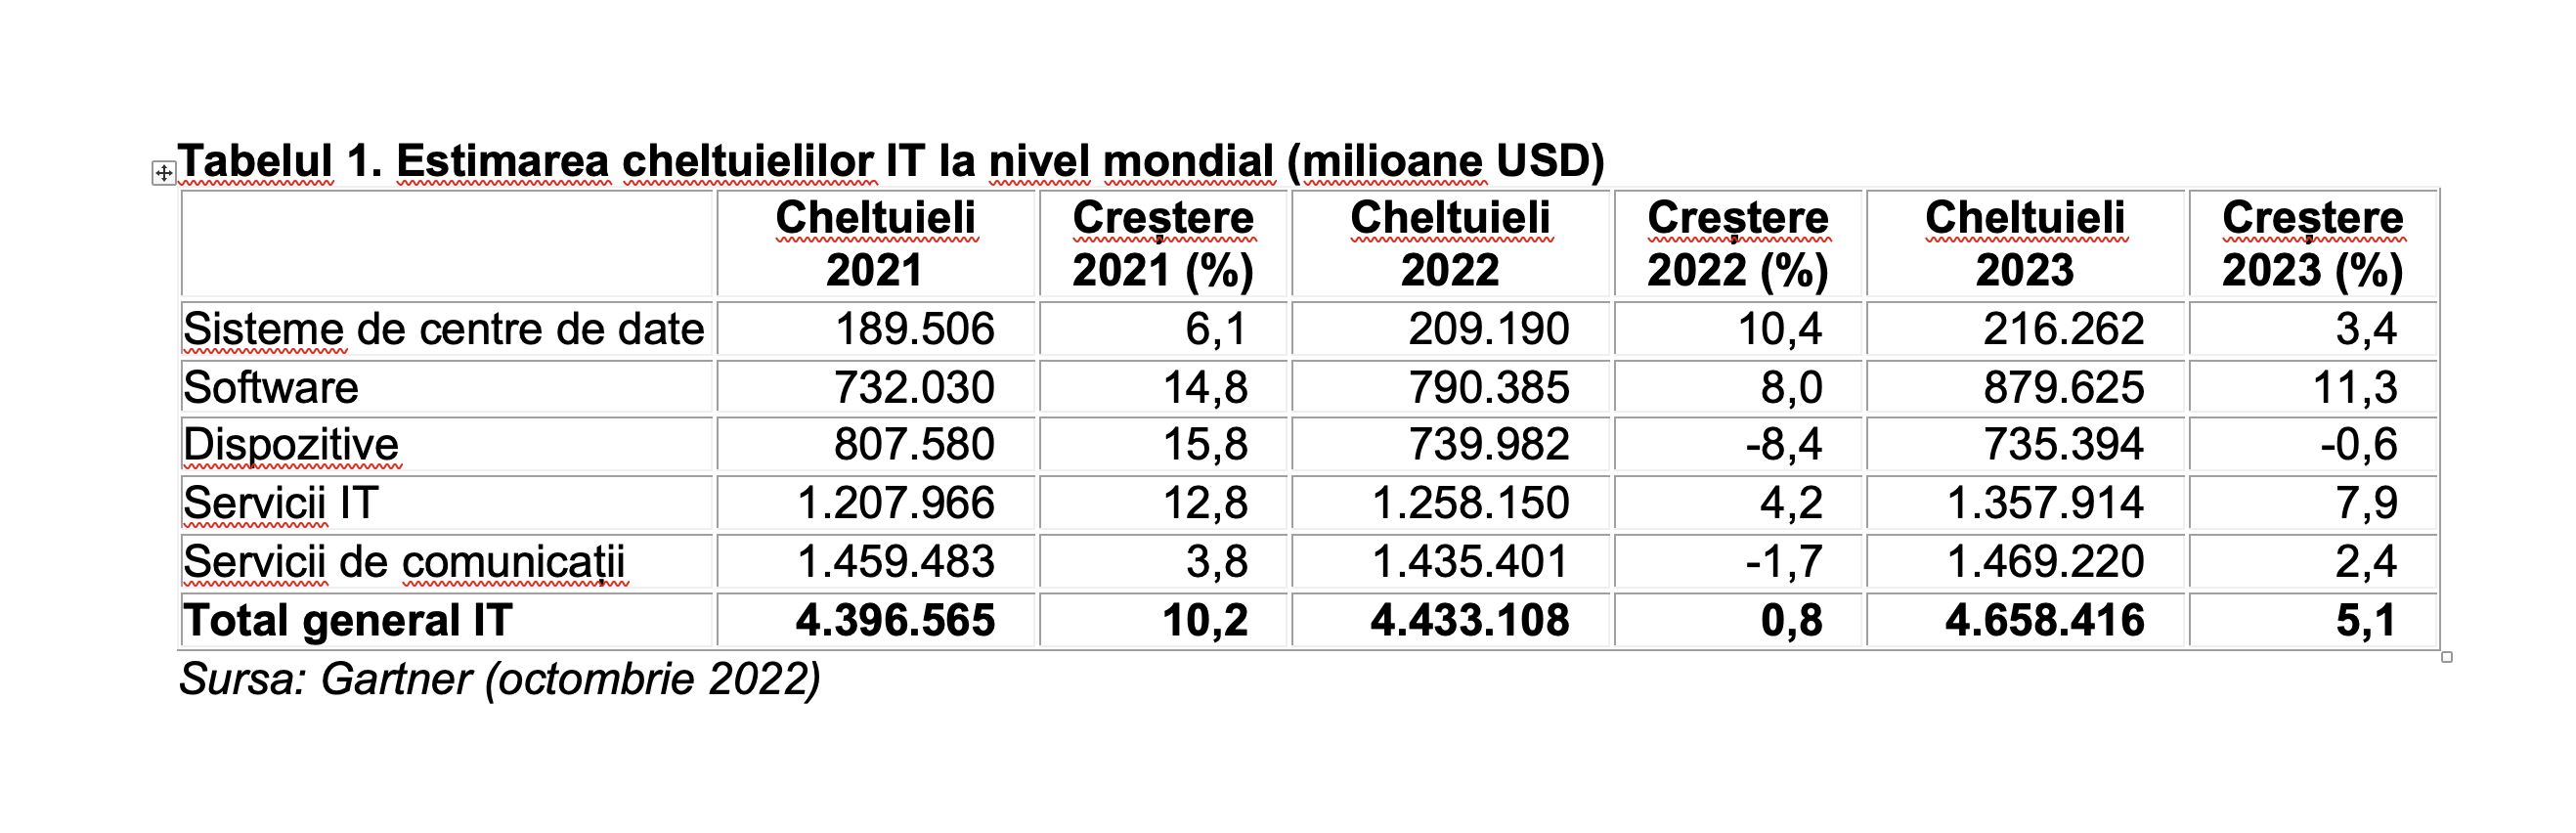 Volumul cheltuielilor IT la nivel mondial va creste cu 5,1% in 2023